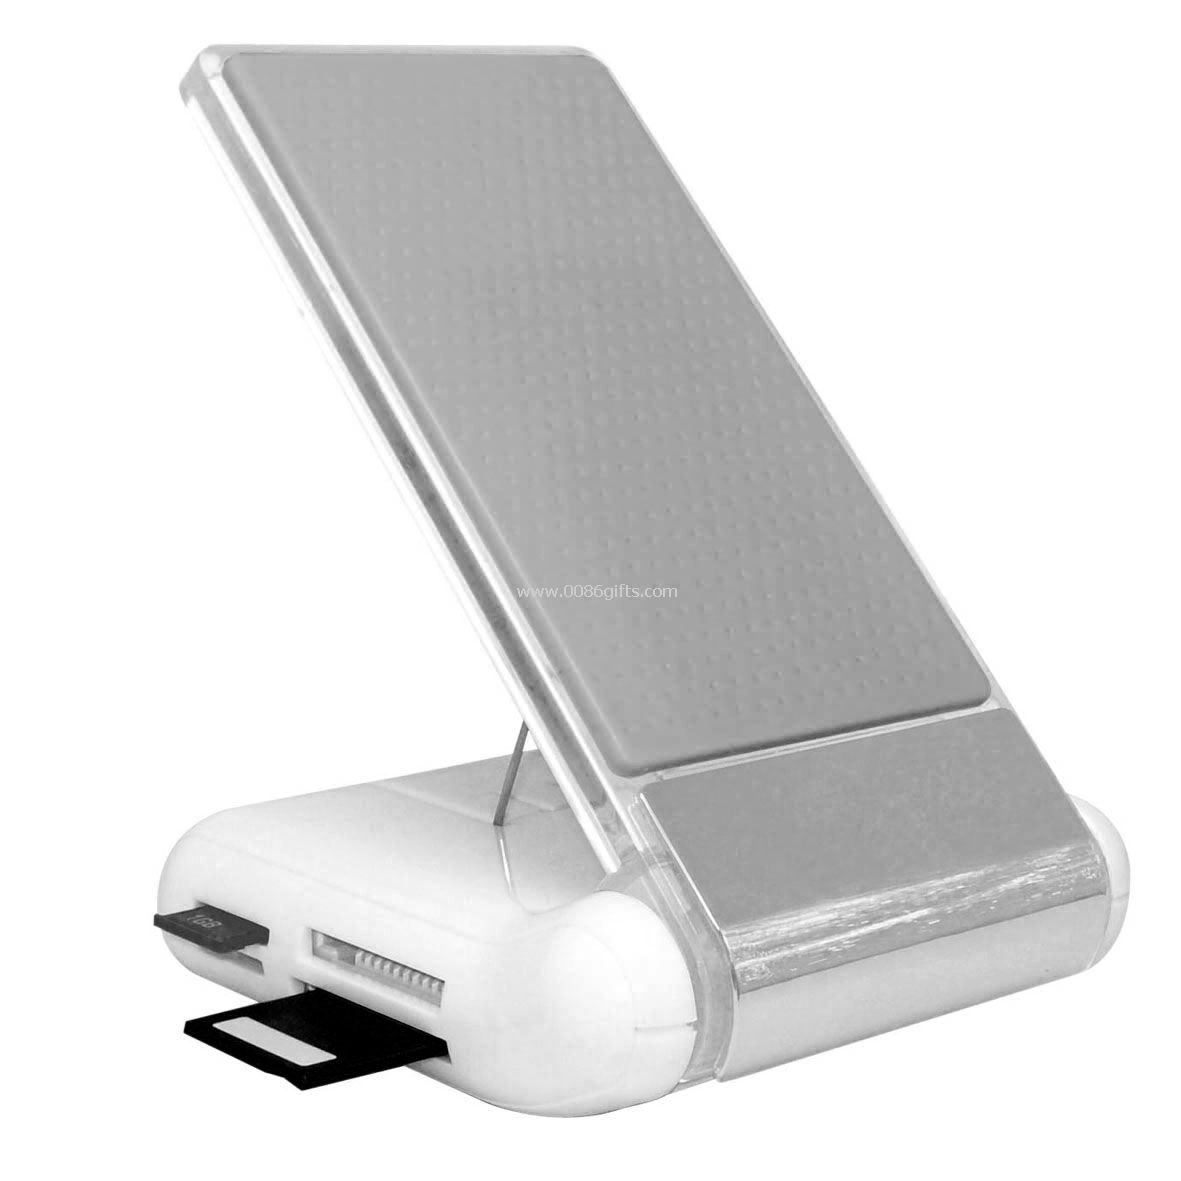 USB Hub Card Reader supporto veicolare